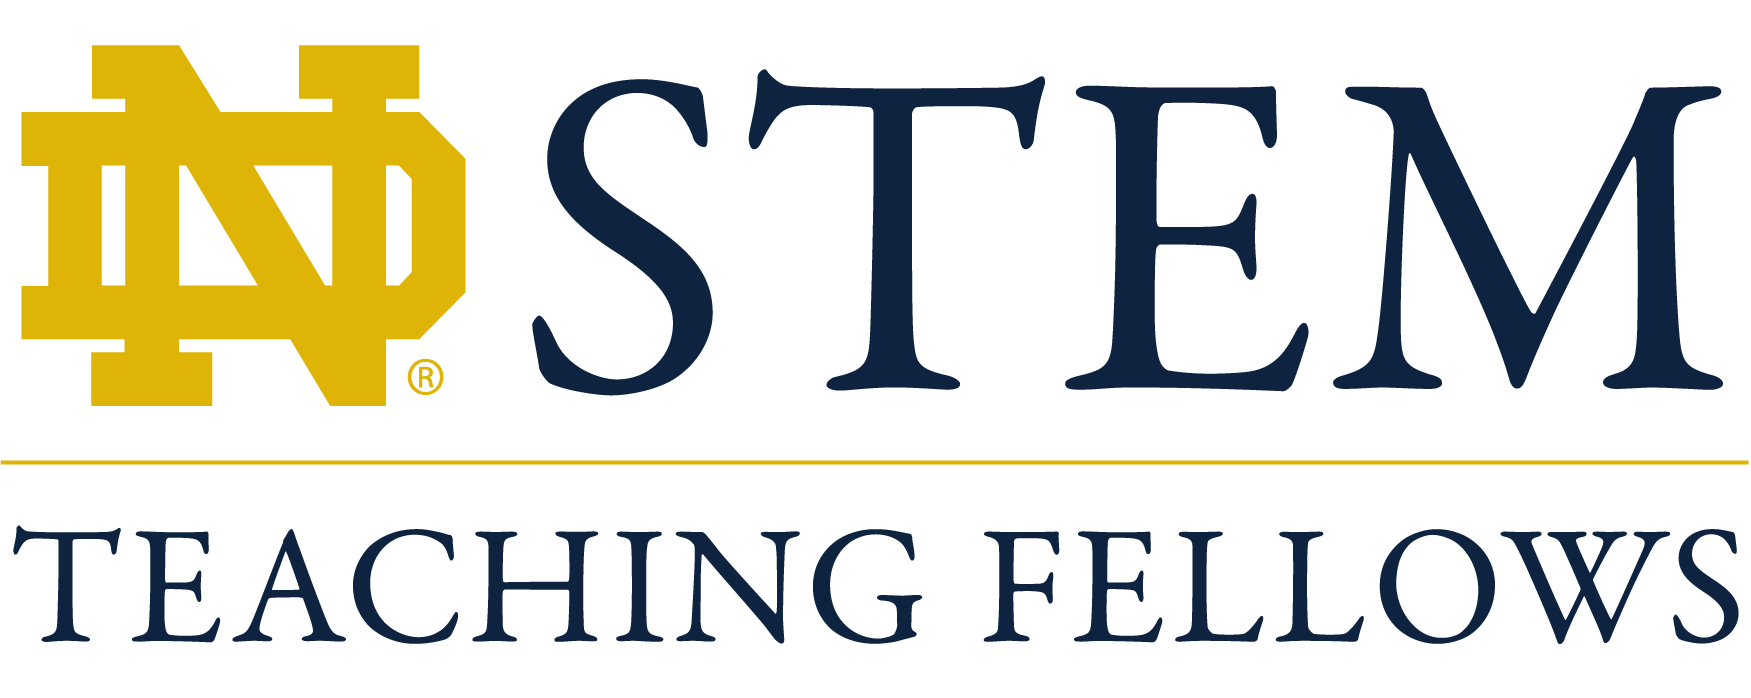 STEM Teaching Fellows Logo Blue-Gold